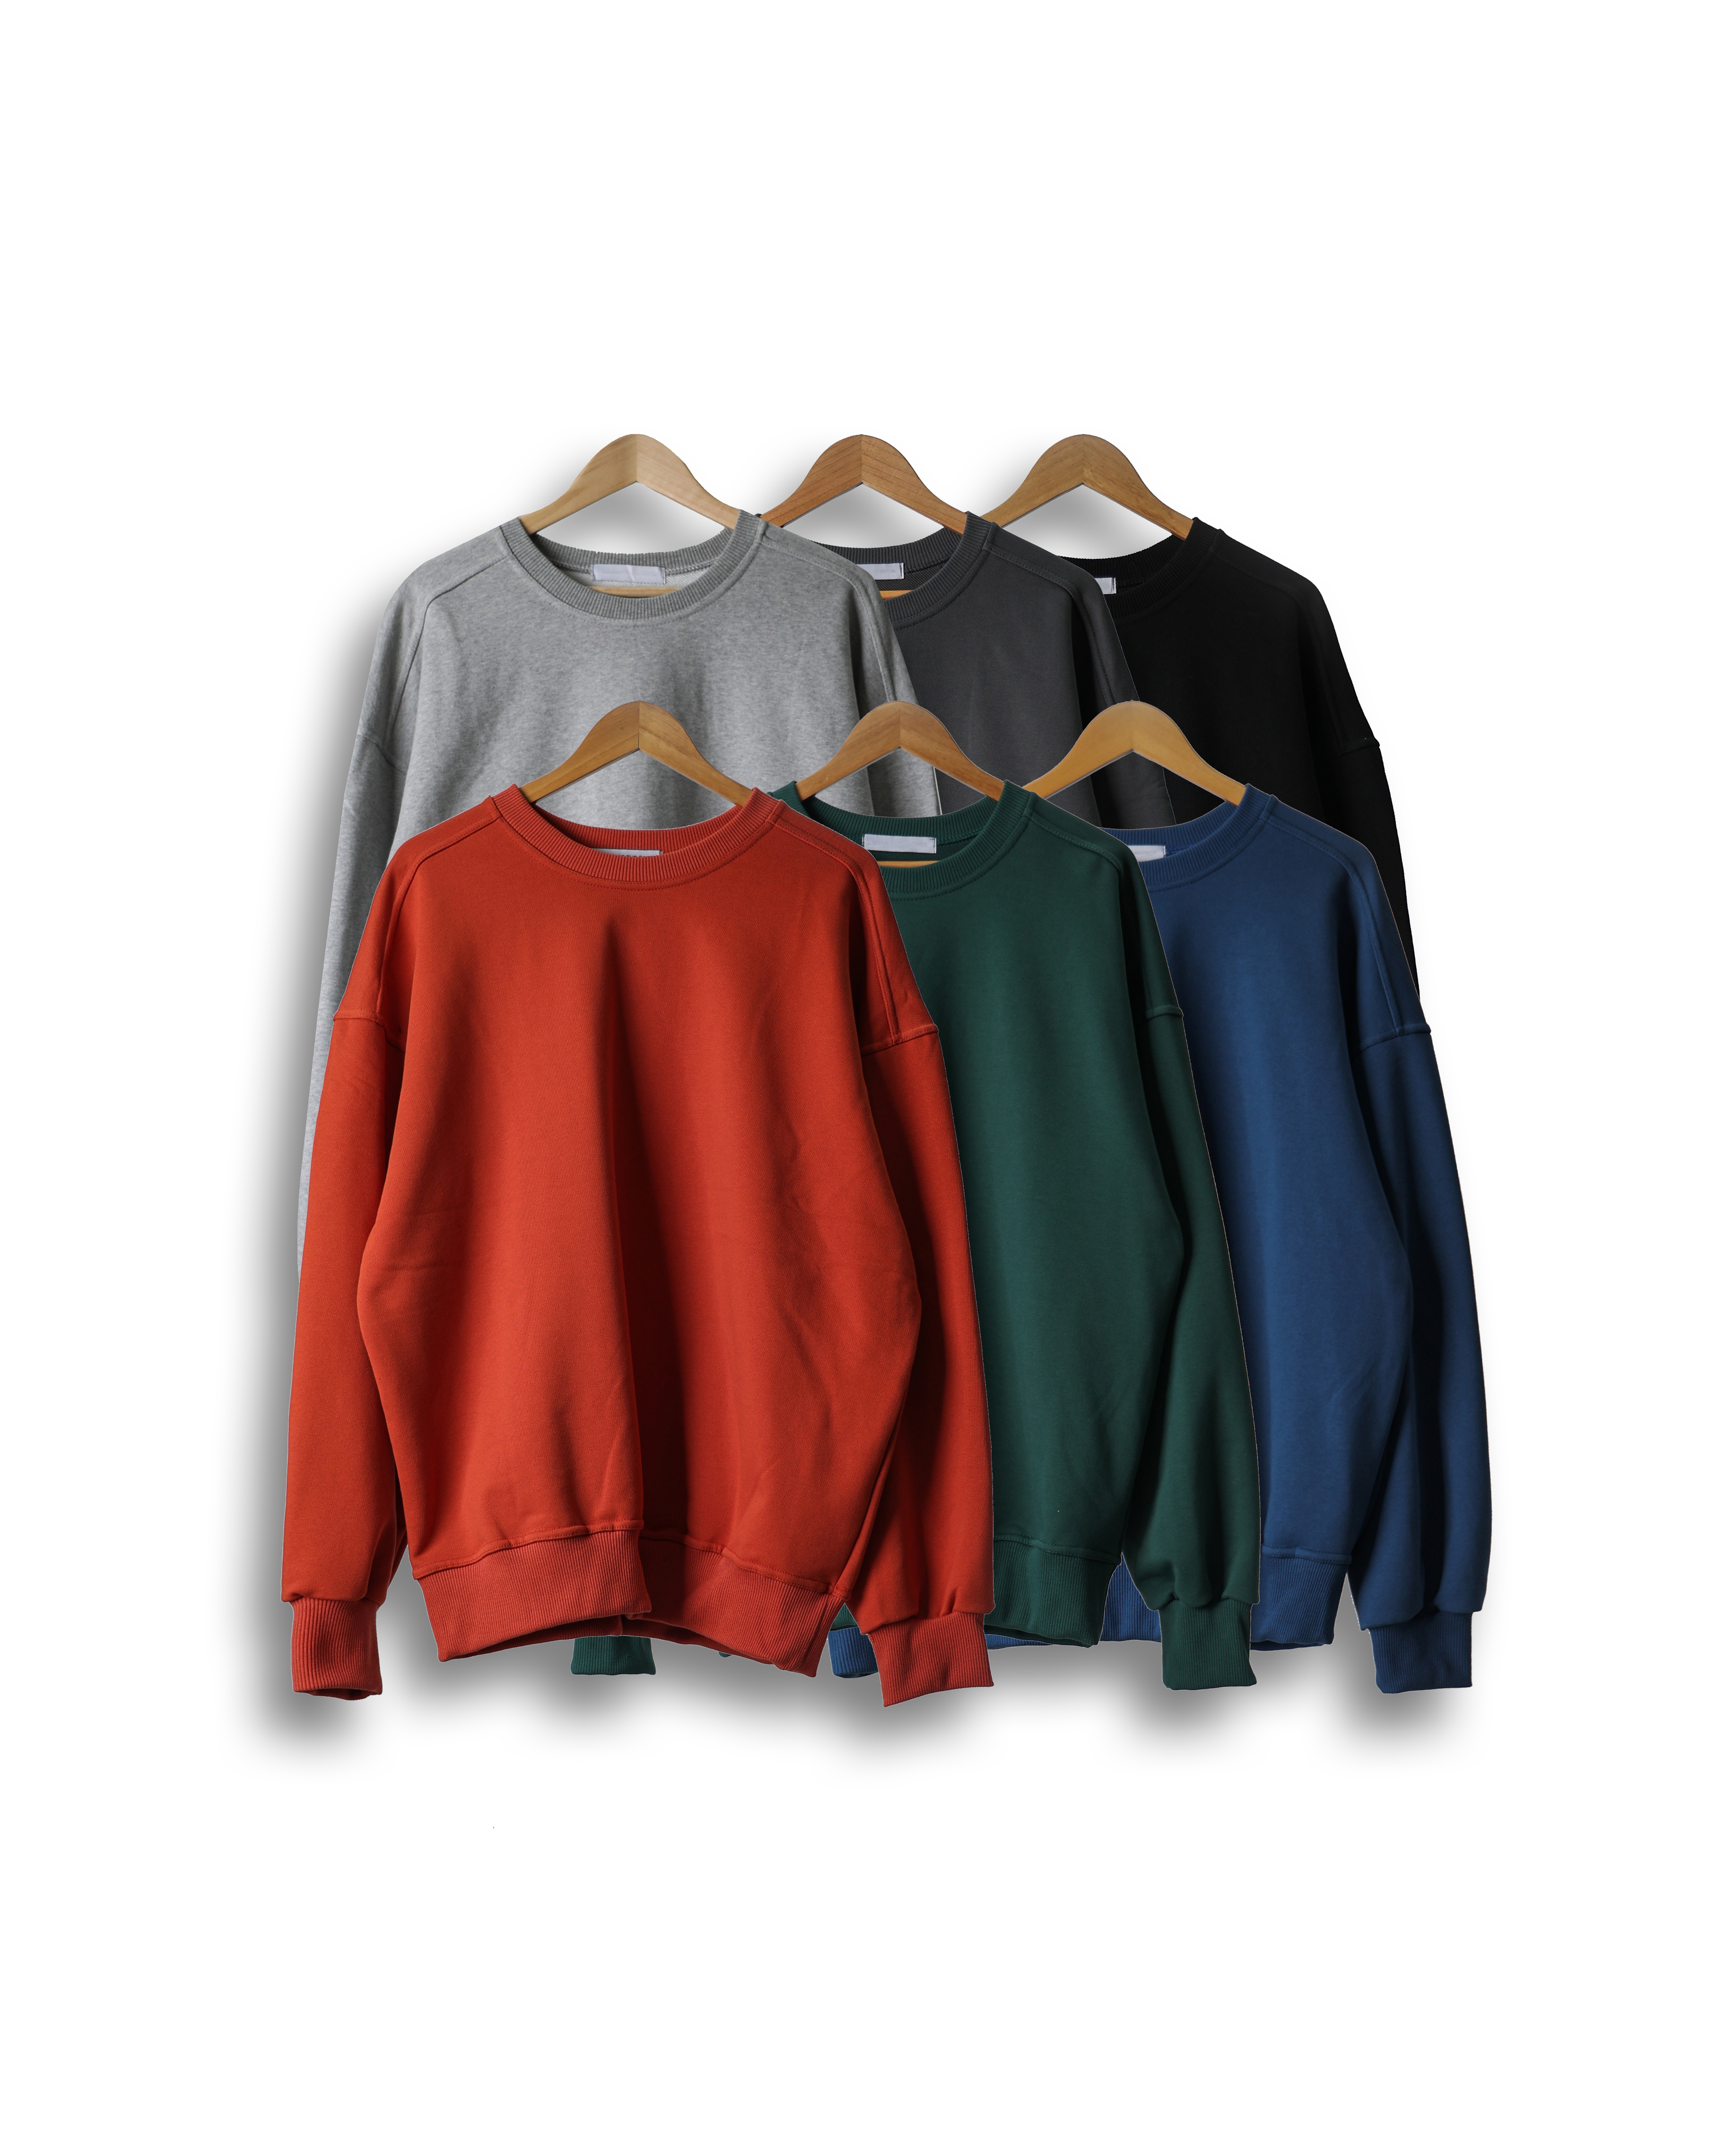 NEVER Detailing Ovesized Basic Sweat Shirts (Black/Charcoal/Gray/Blue/Green/Carrot) - 3차 리오더 (3/23 배송예정)